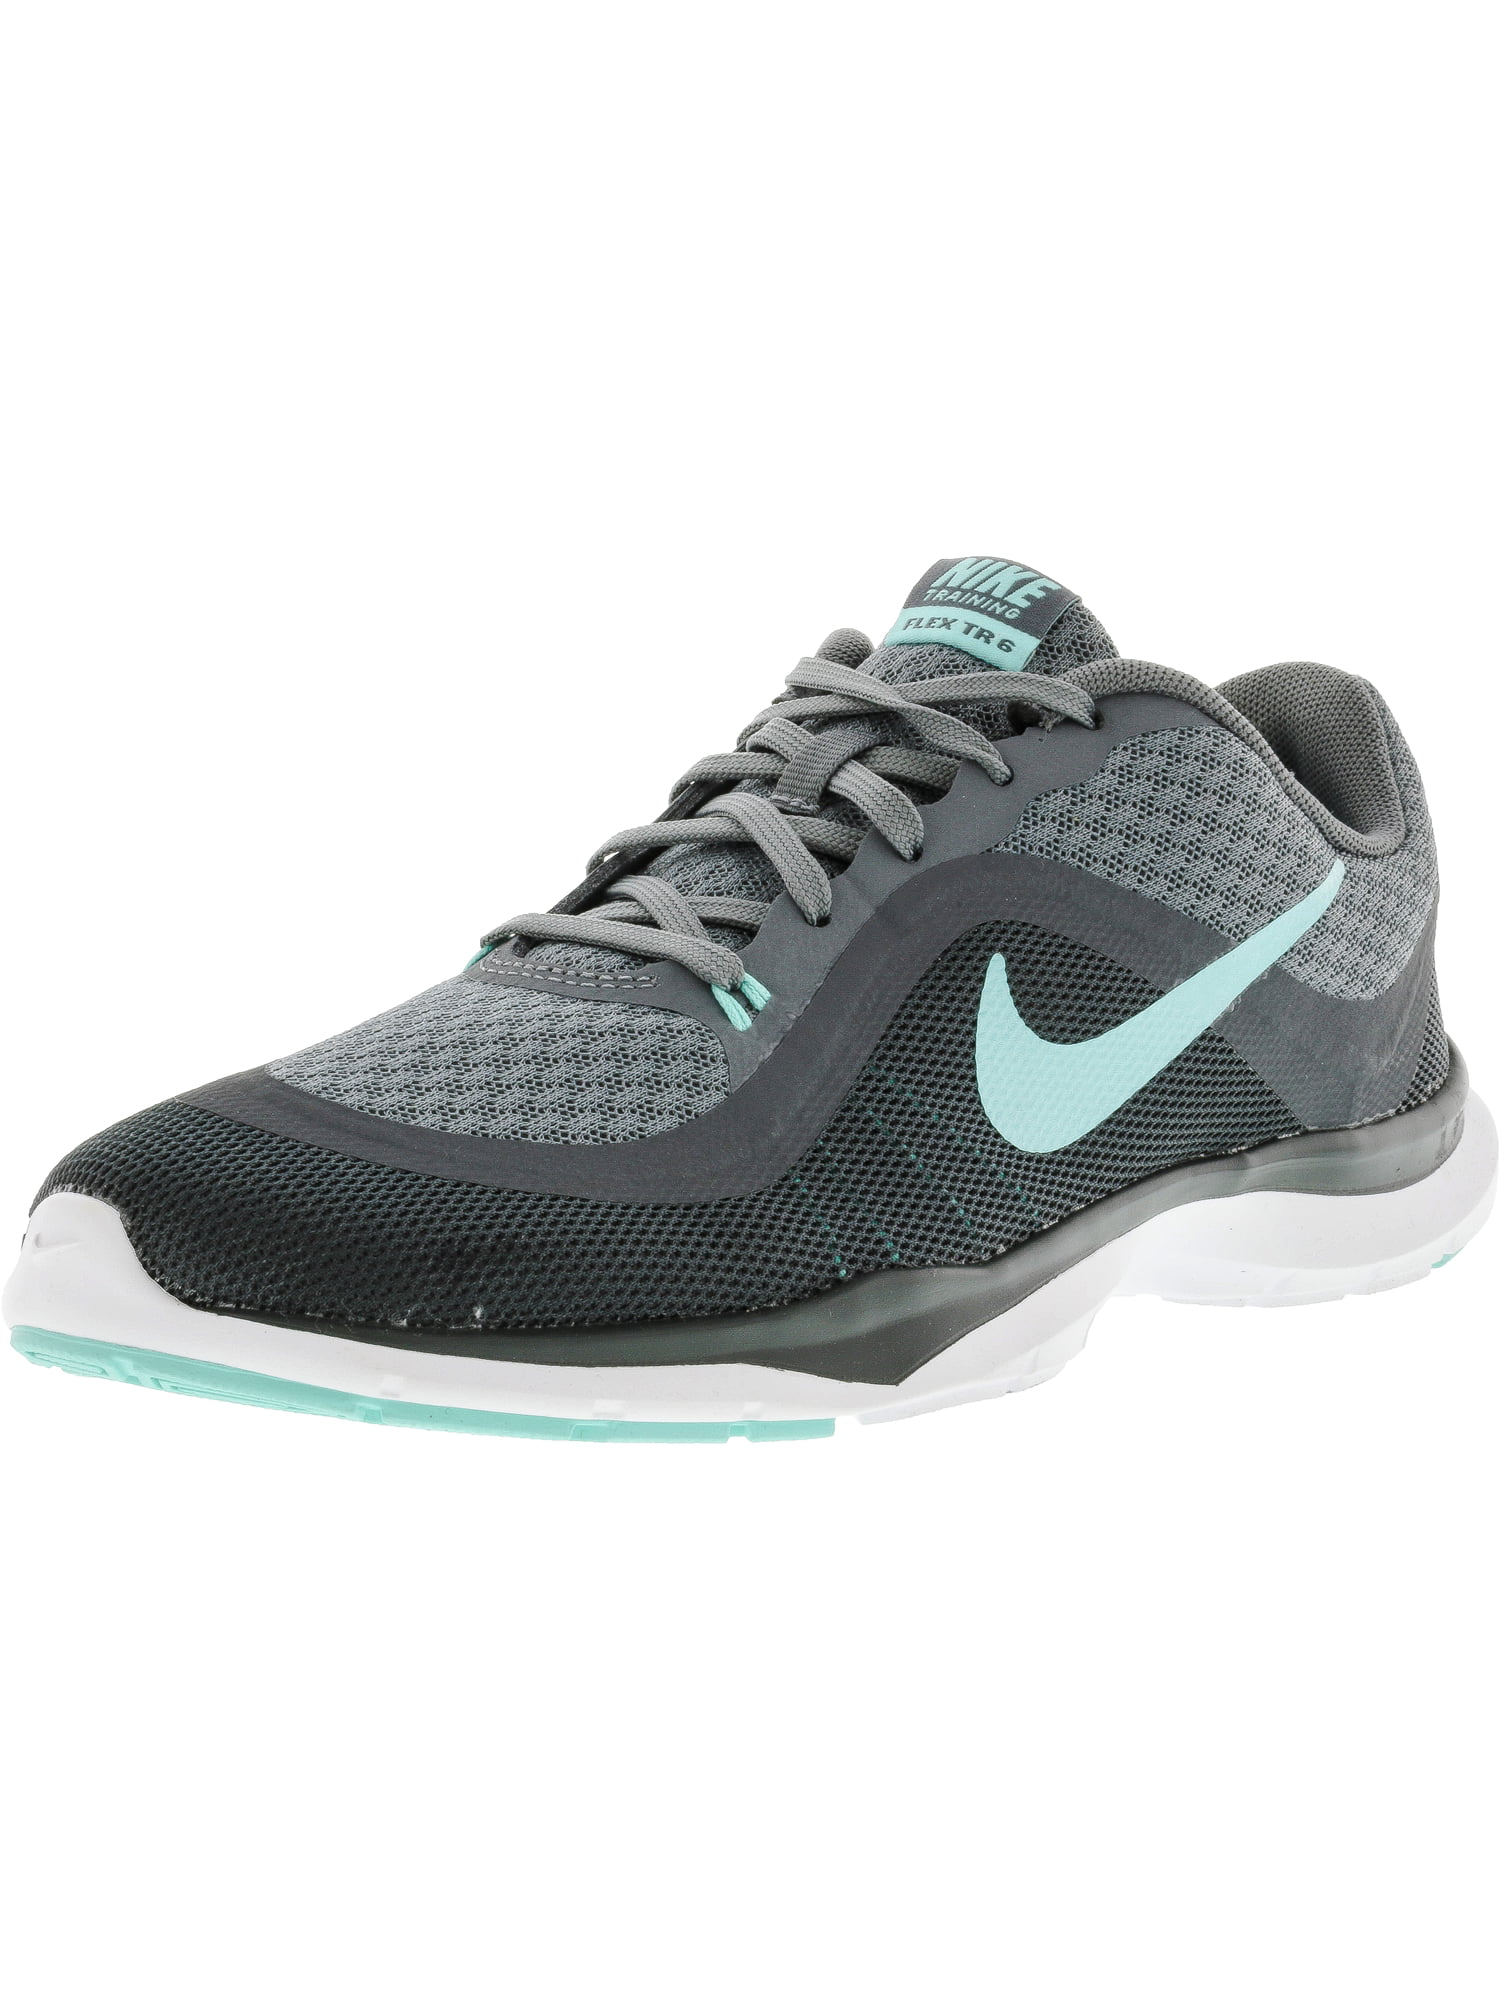 Nike Women's Flex Trainer 6 Cool Grey / Hyper Turquoise Dark Ankle-High ...